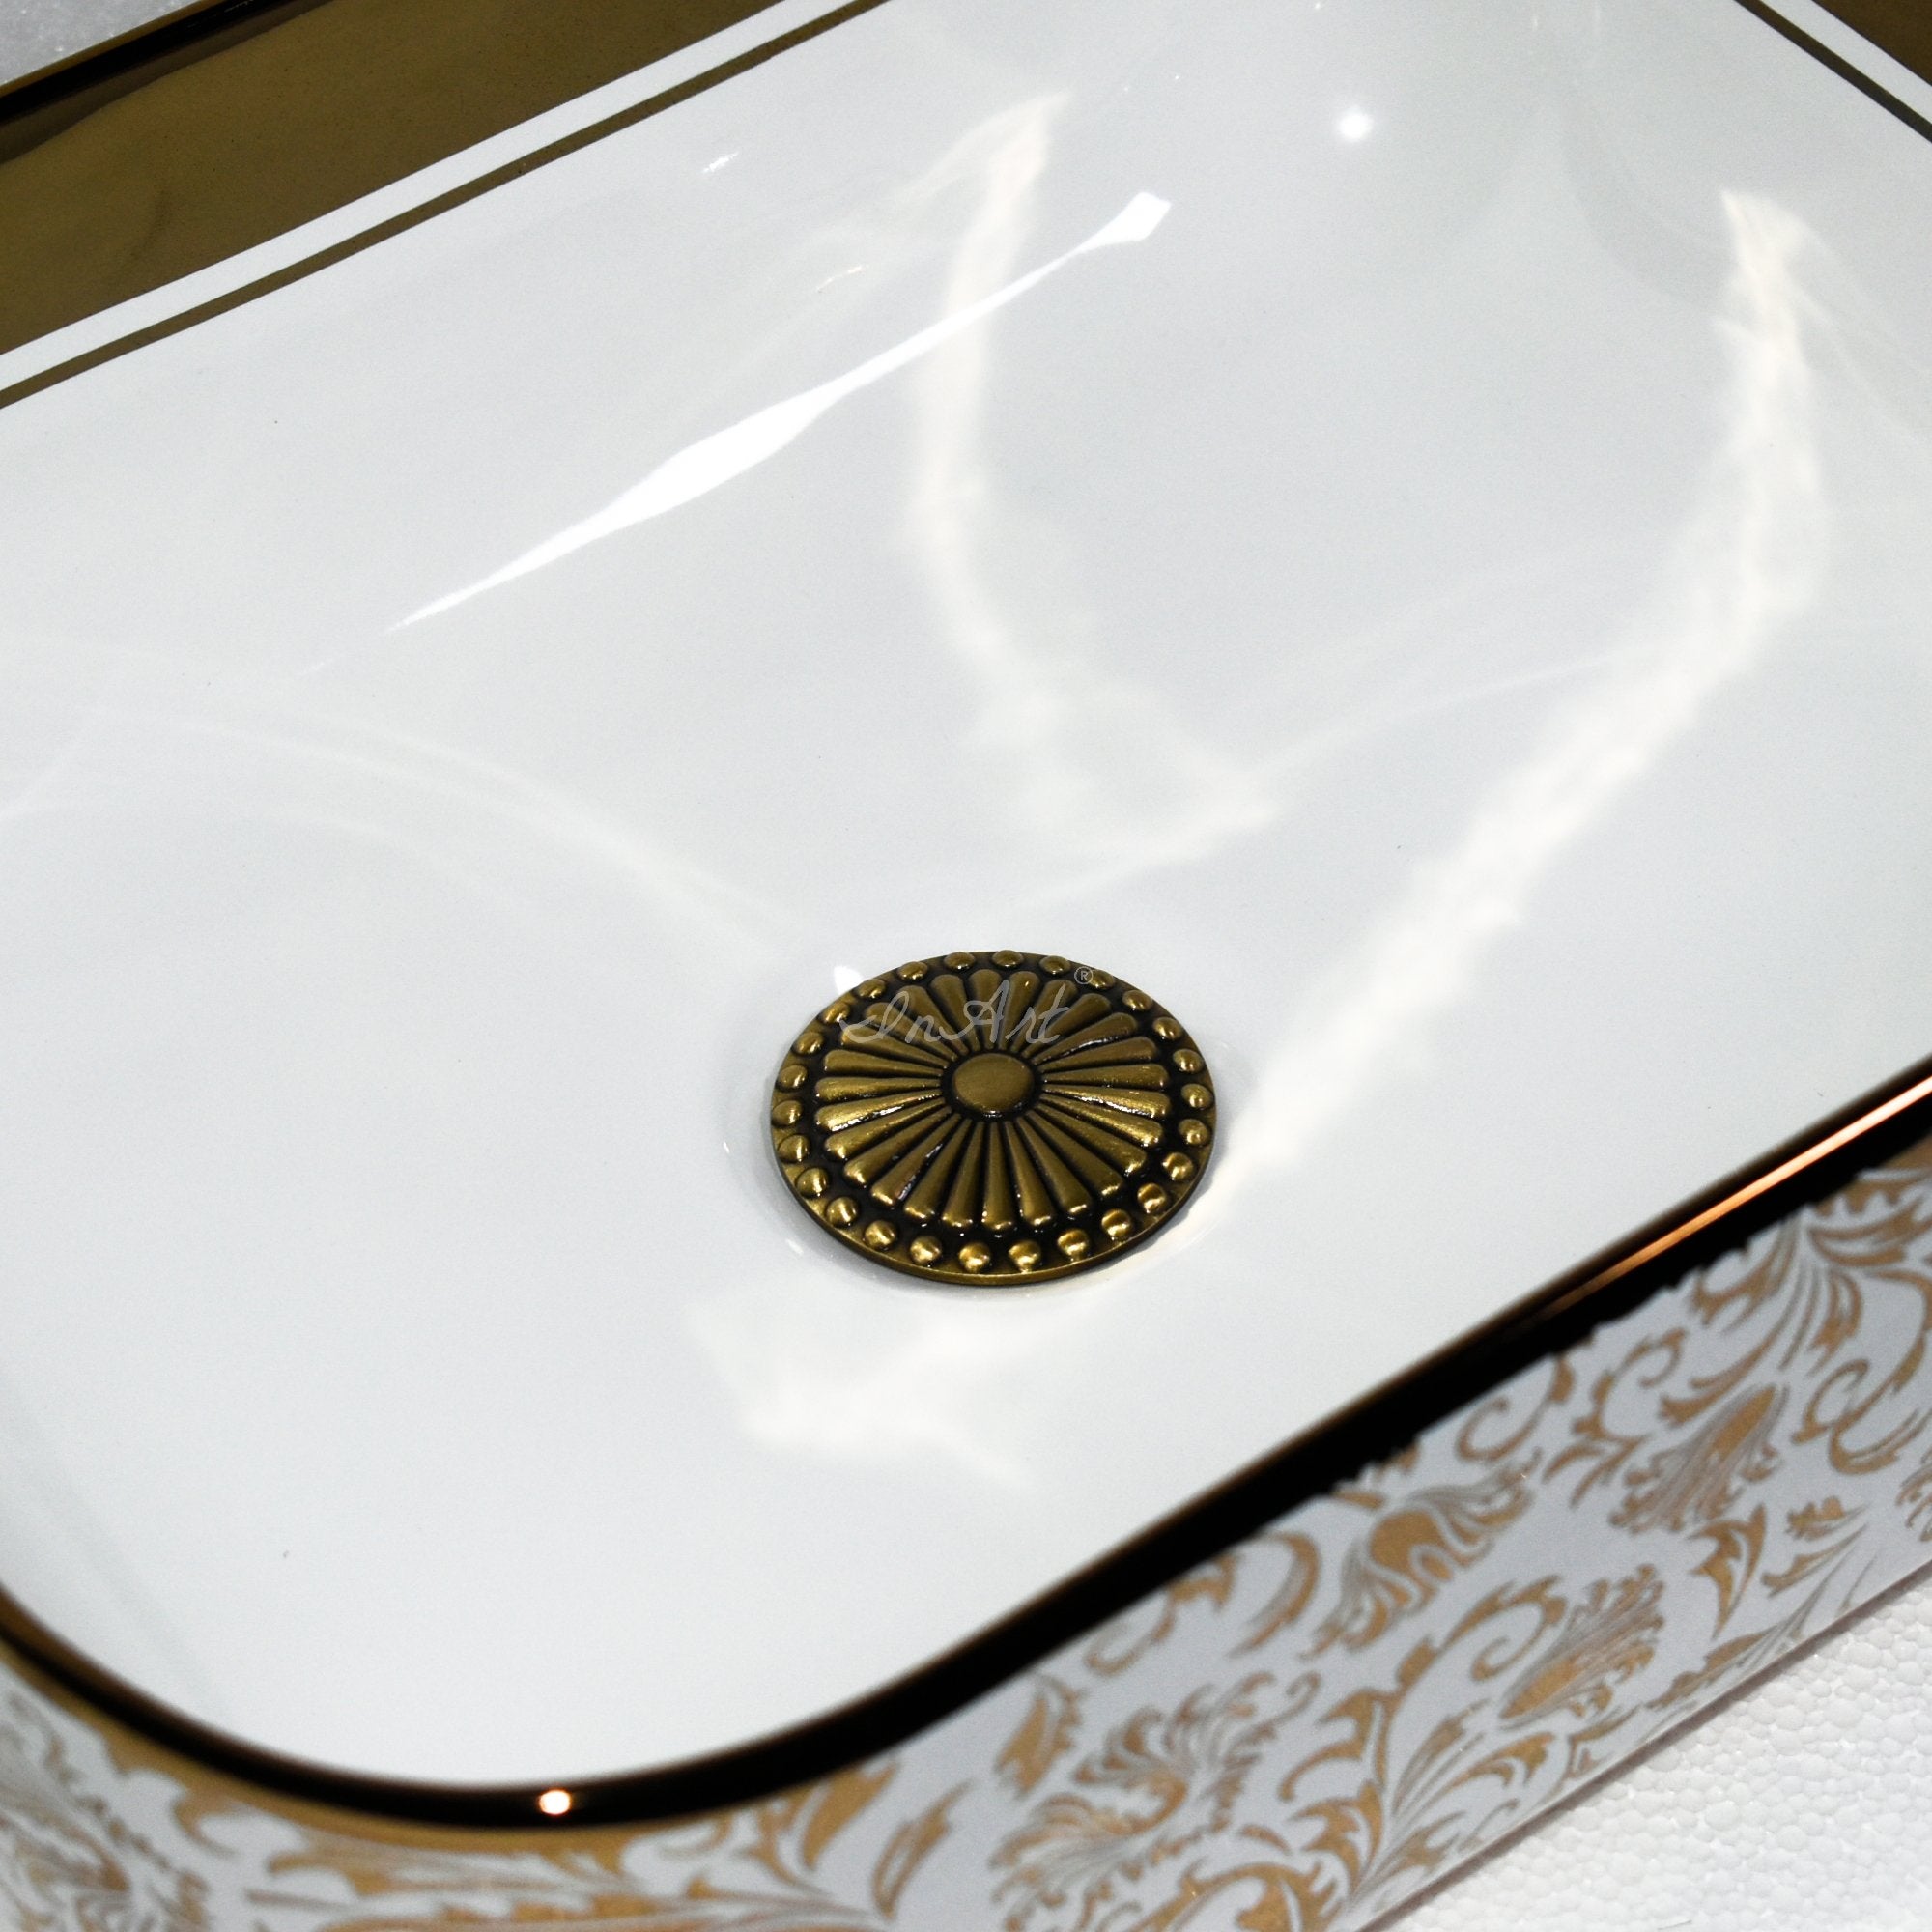 InArt Vessel Bathroom Sink Pop-Up Drain in Antique Gold Color 32 MM 5", Brass Top